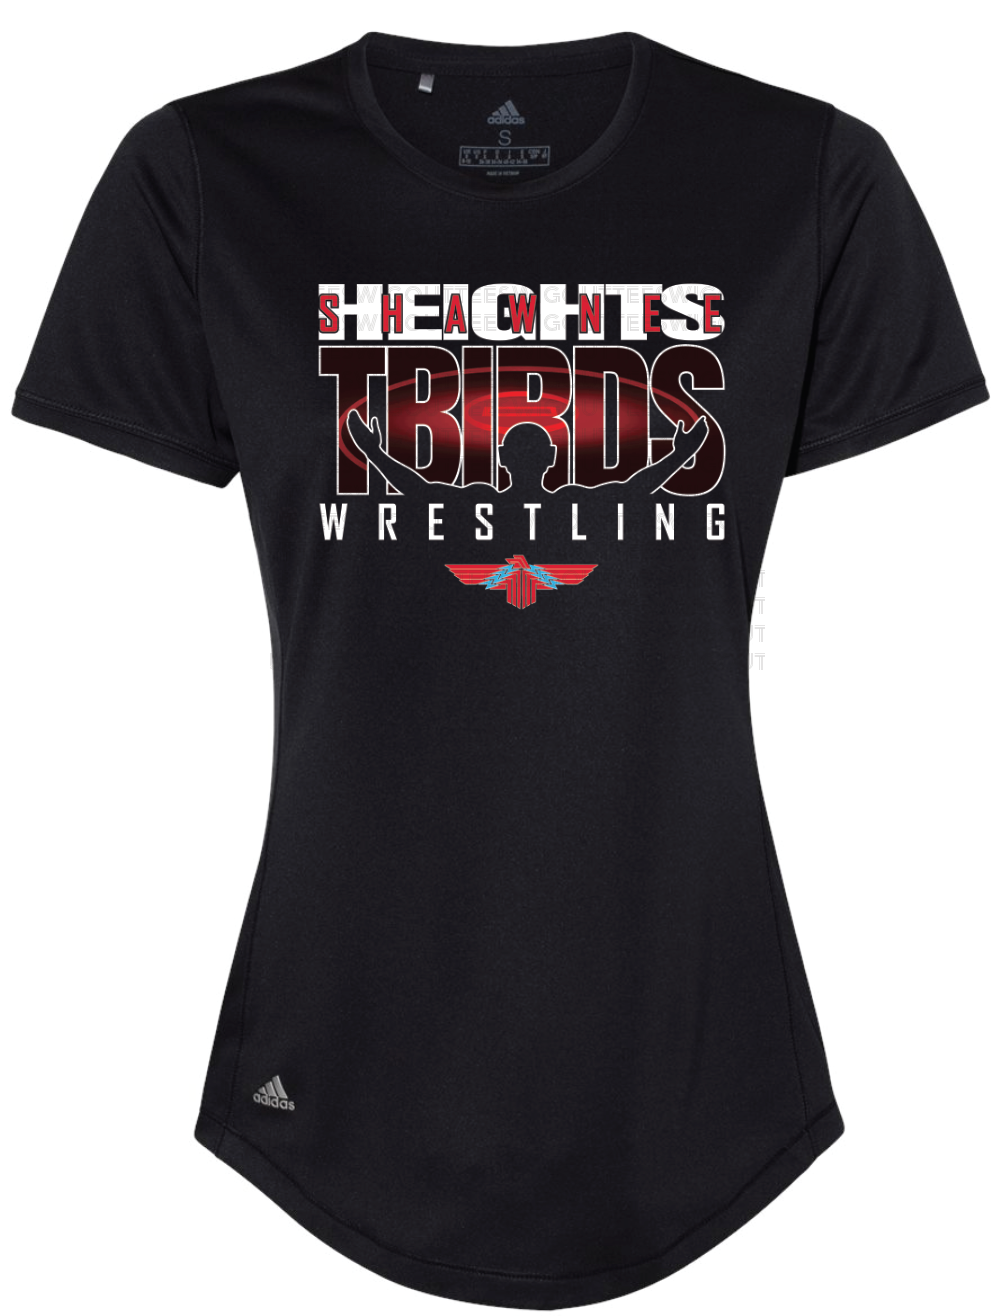 Heights Wrestling Adidas Womens Sports T-shirt